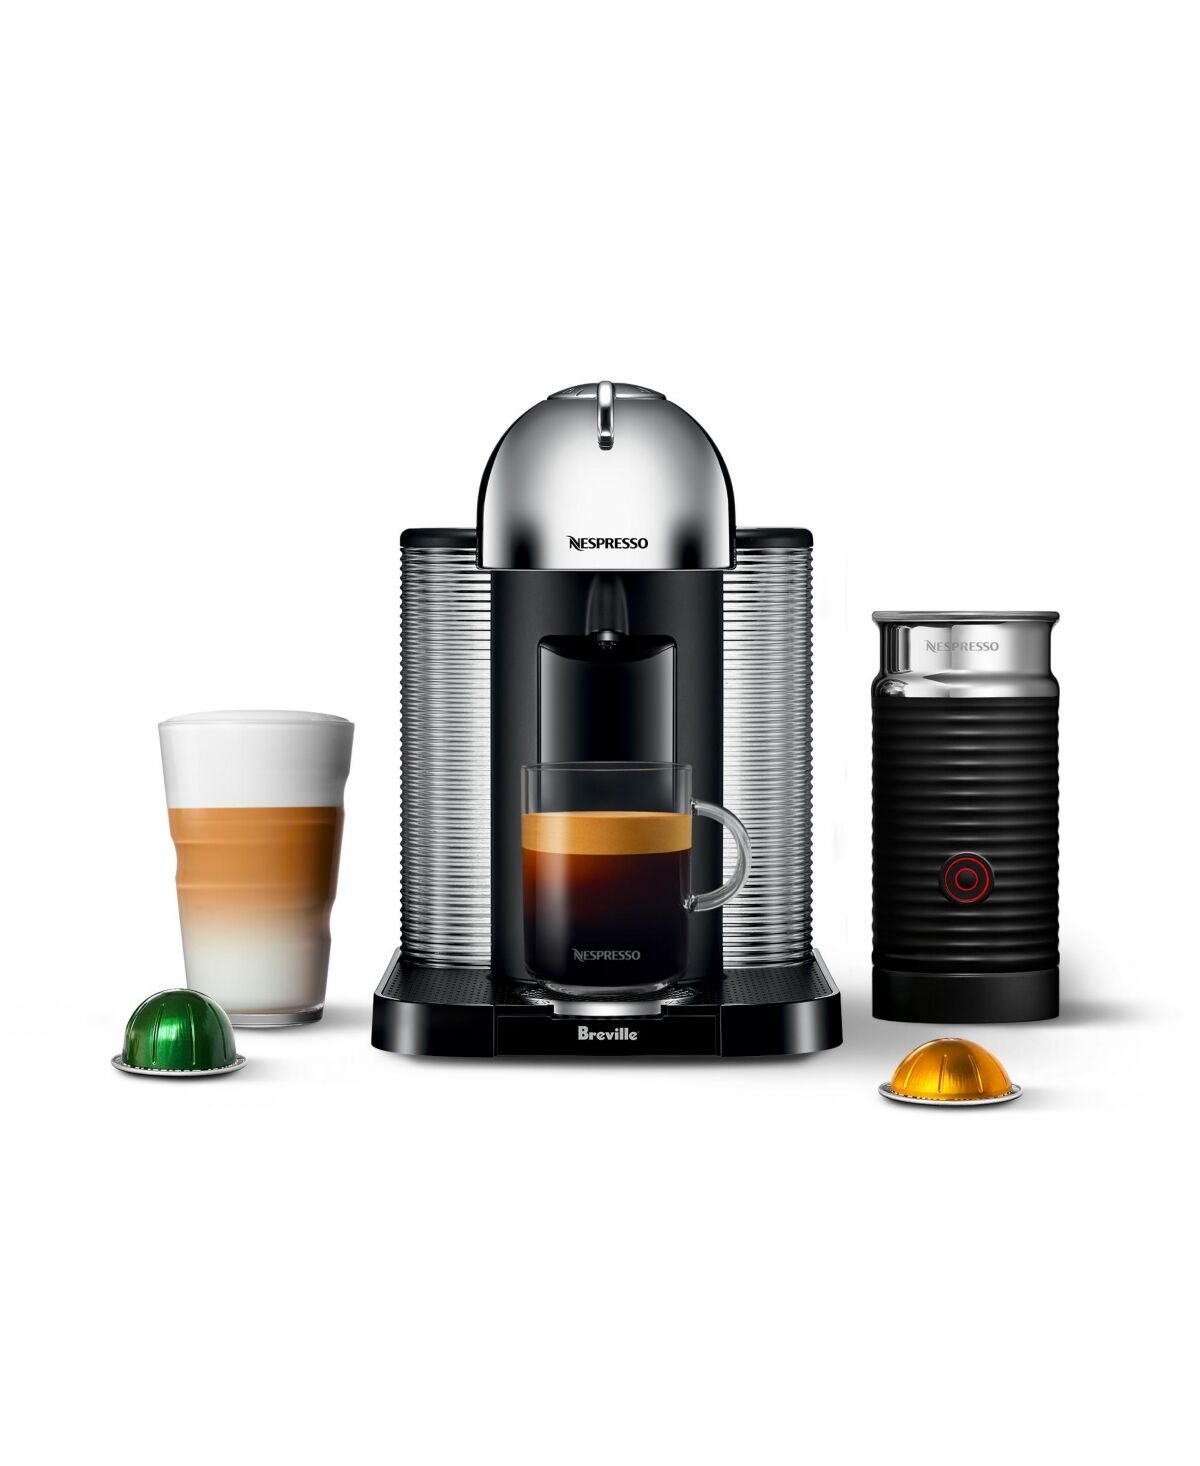 Nespresso Vertuo Coffee and Espresso Maker by Breville, Chrome with Aeroccino Milk Frother - Chrome